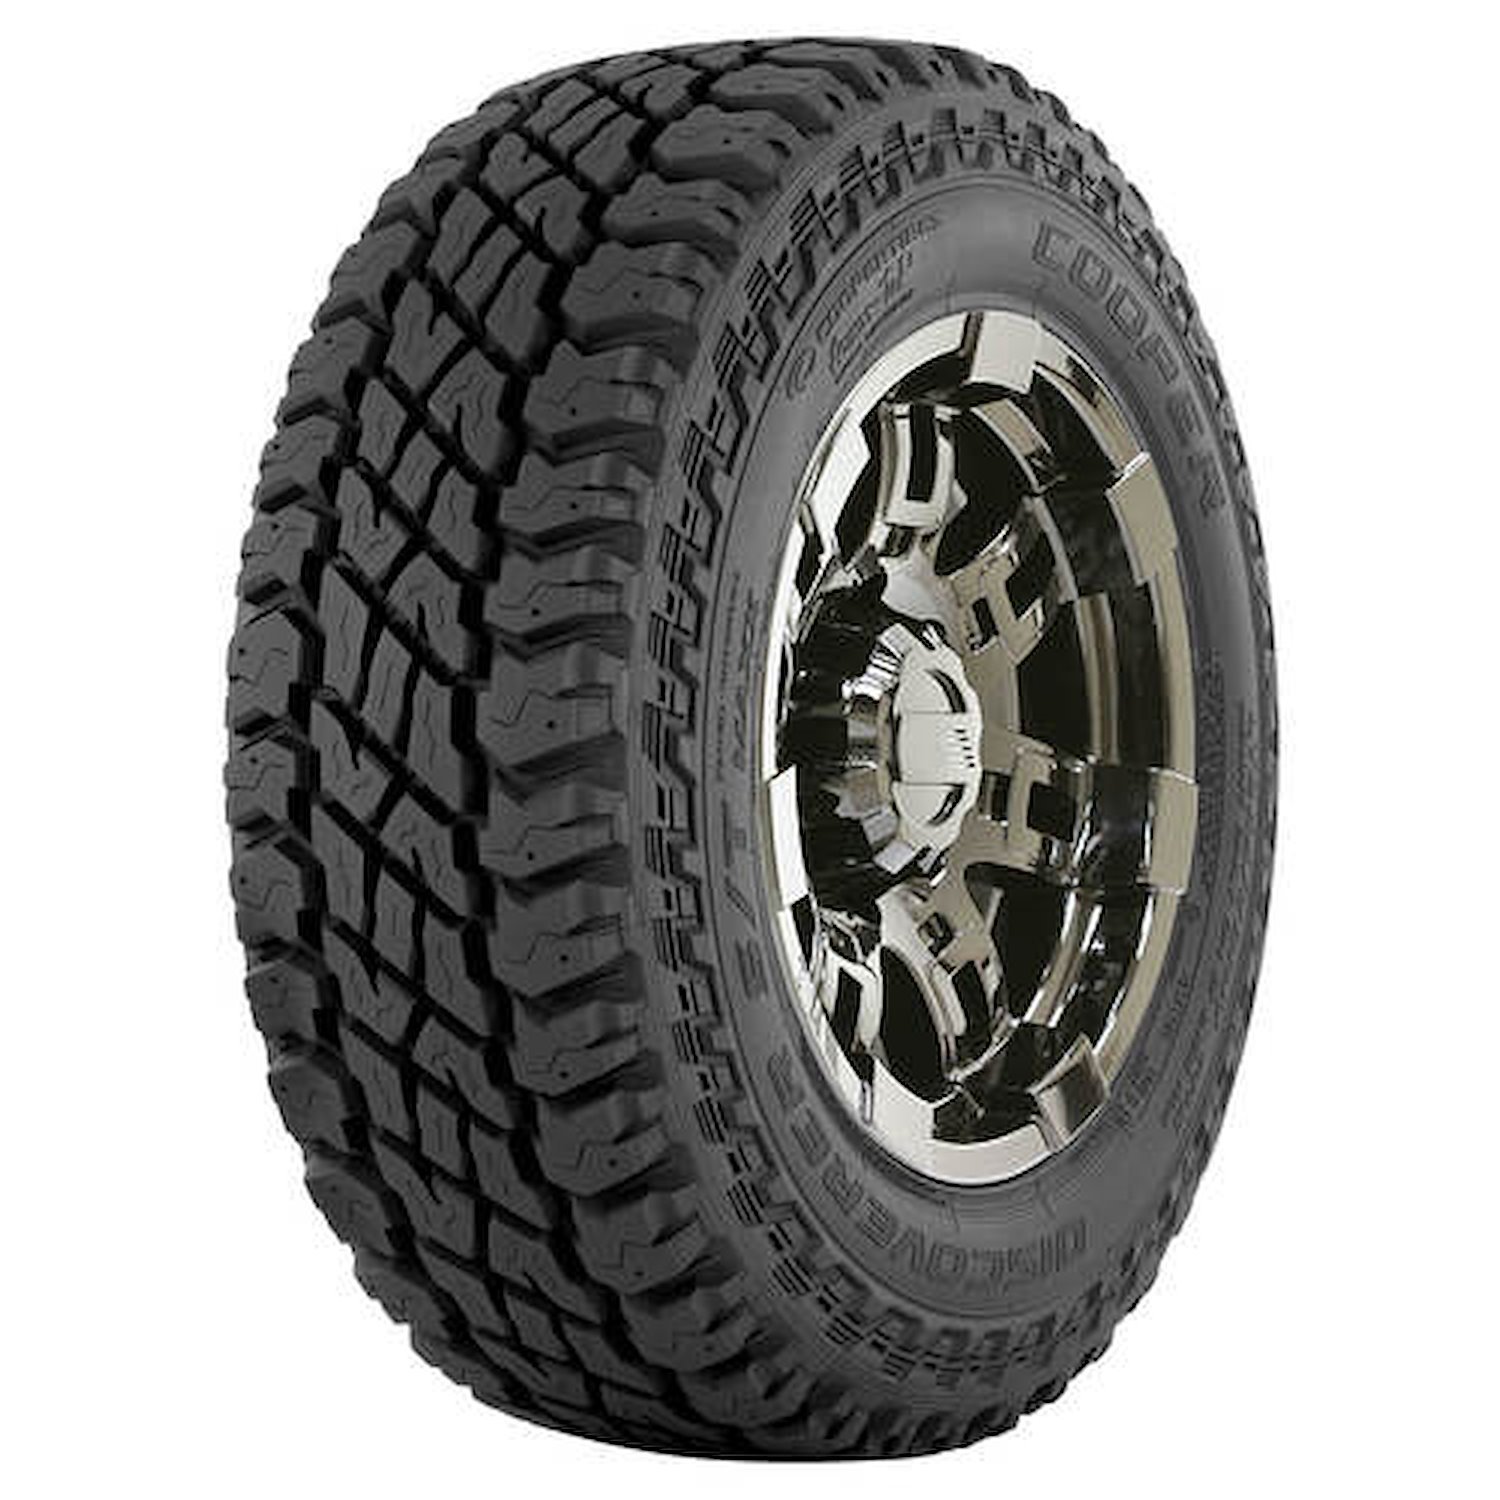 Discoverer S/T Maxx All-Terrain Tire, LT255/85R16